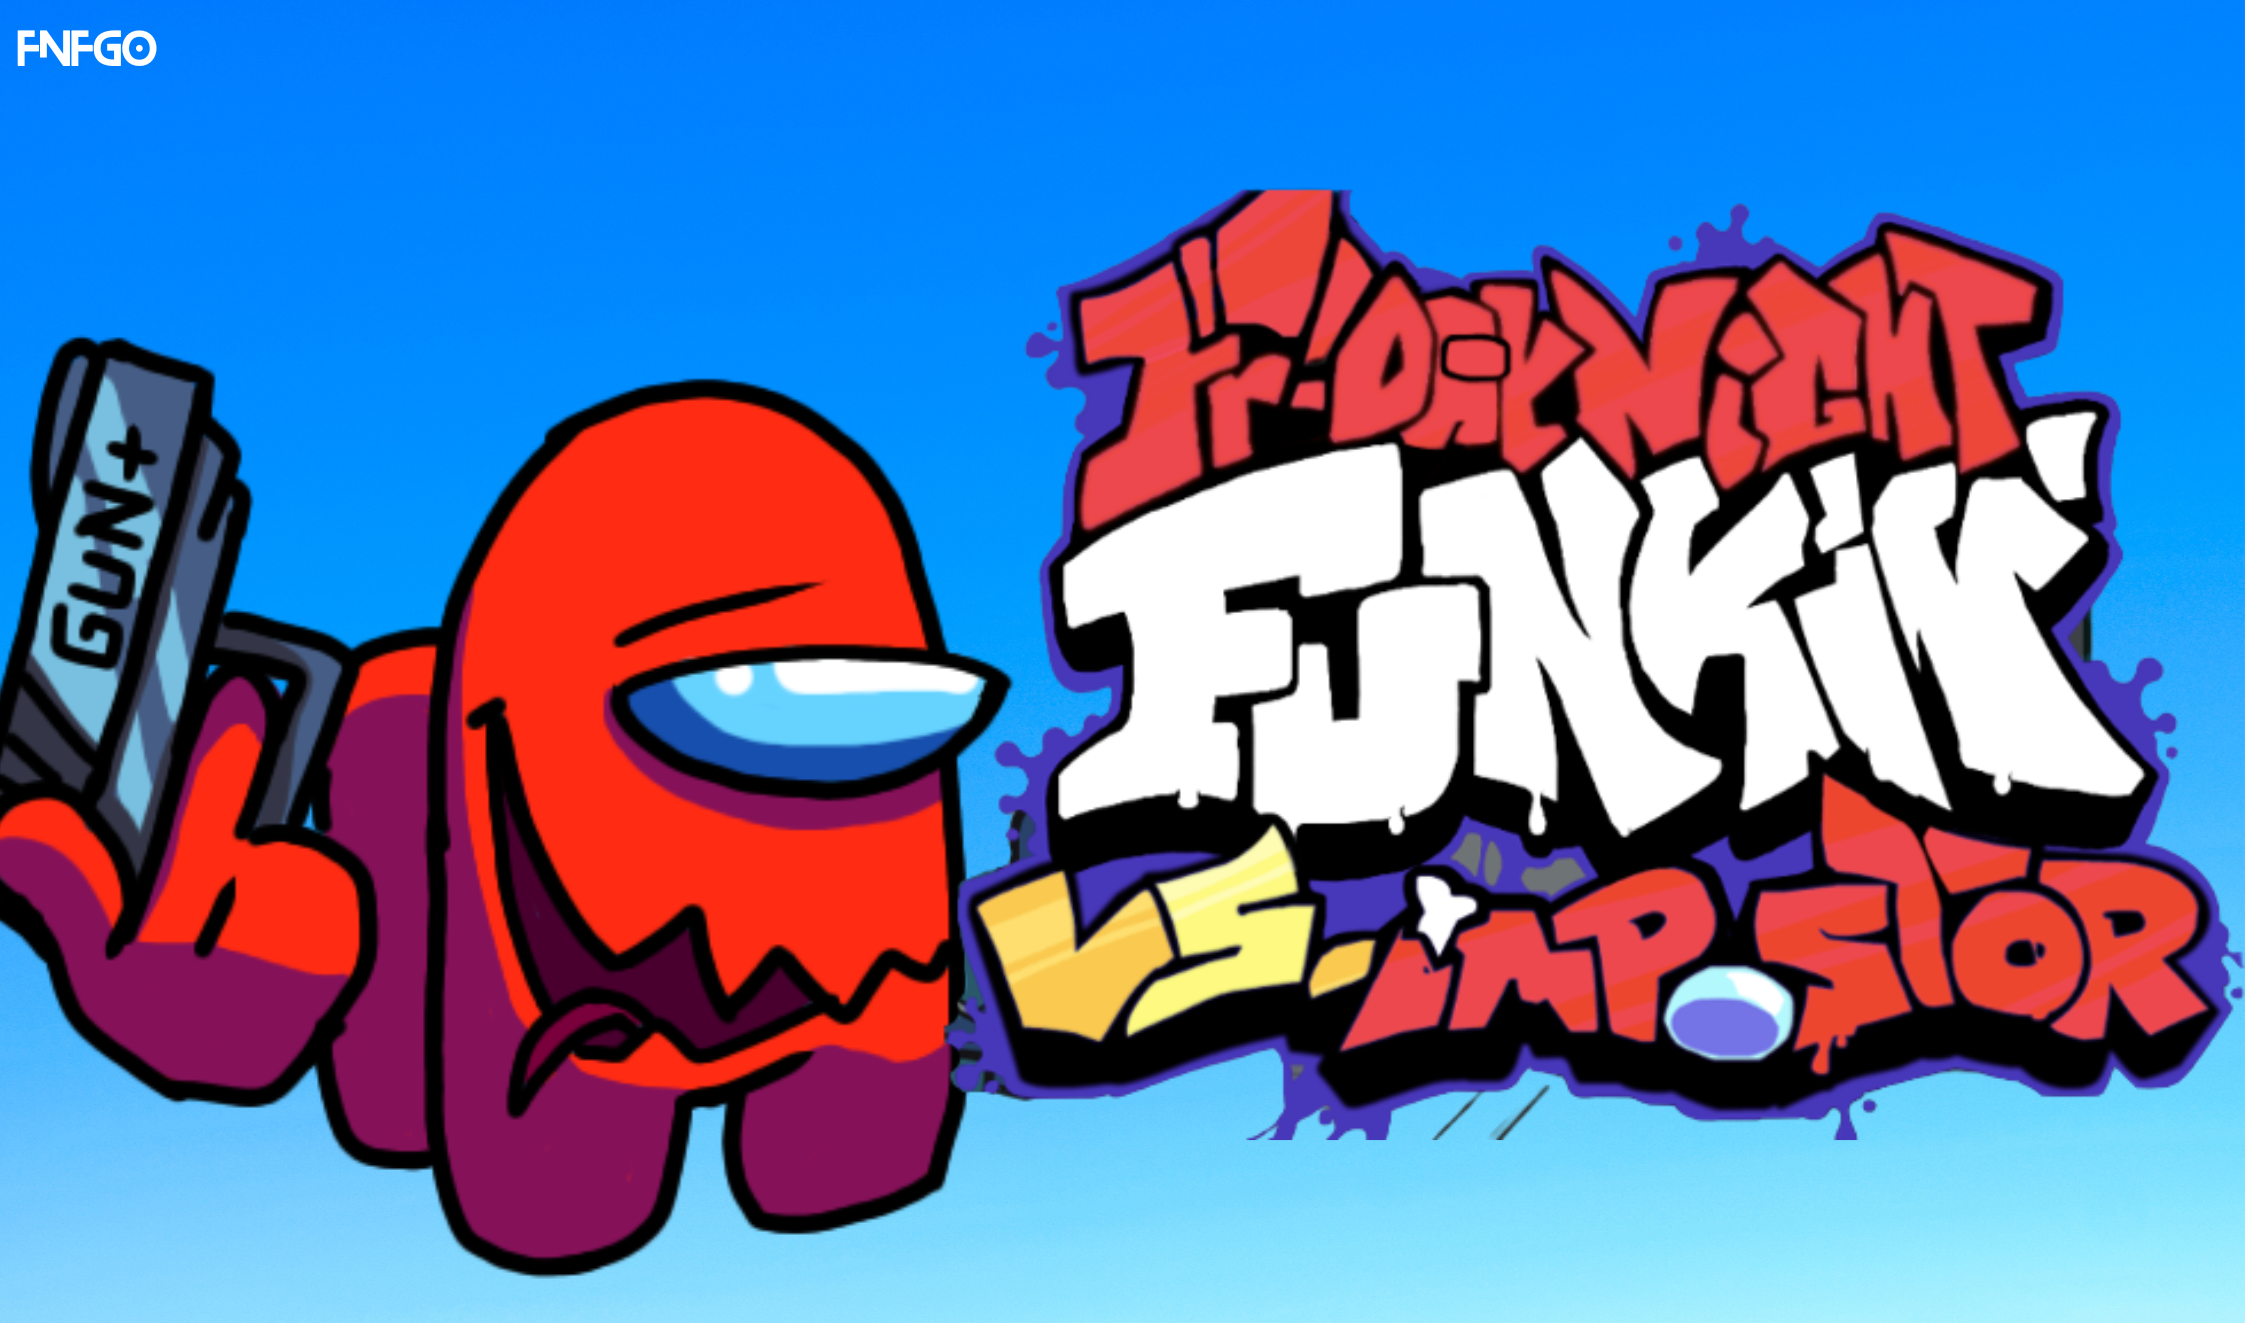 Friday Night Funkin' vs Impostor (Among Us), FNF Mod